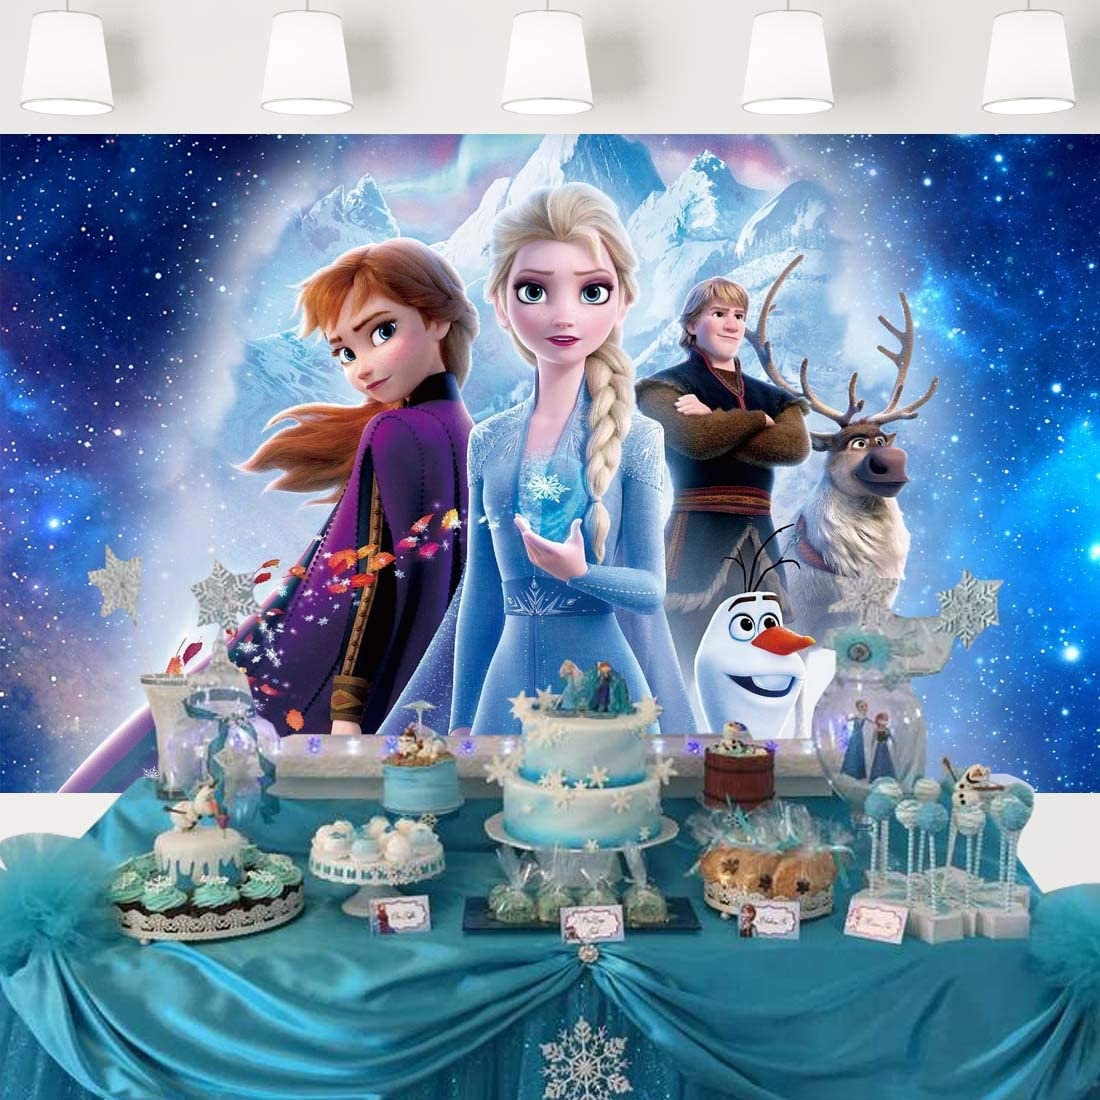 17 Frozen 2 Happy Birthday Balloon - Disney Frozen